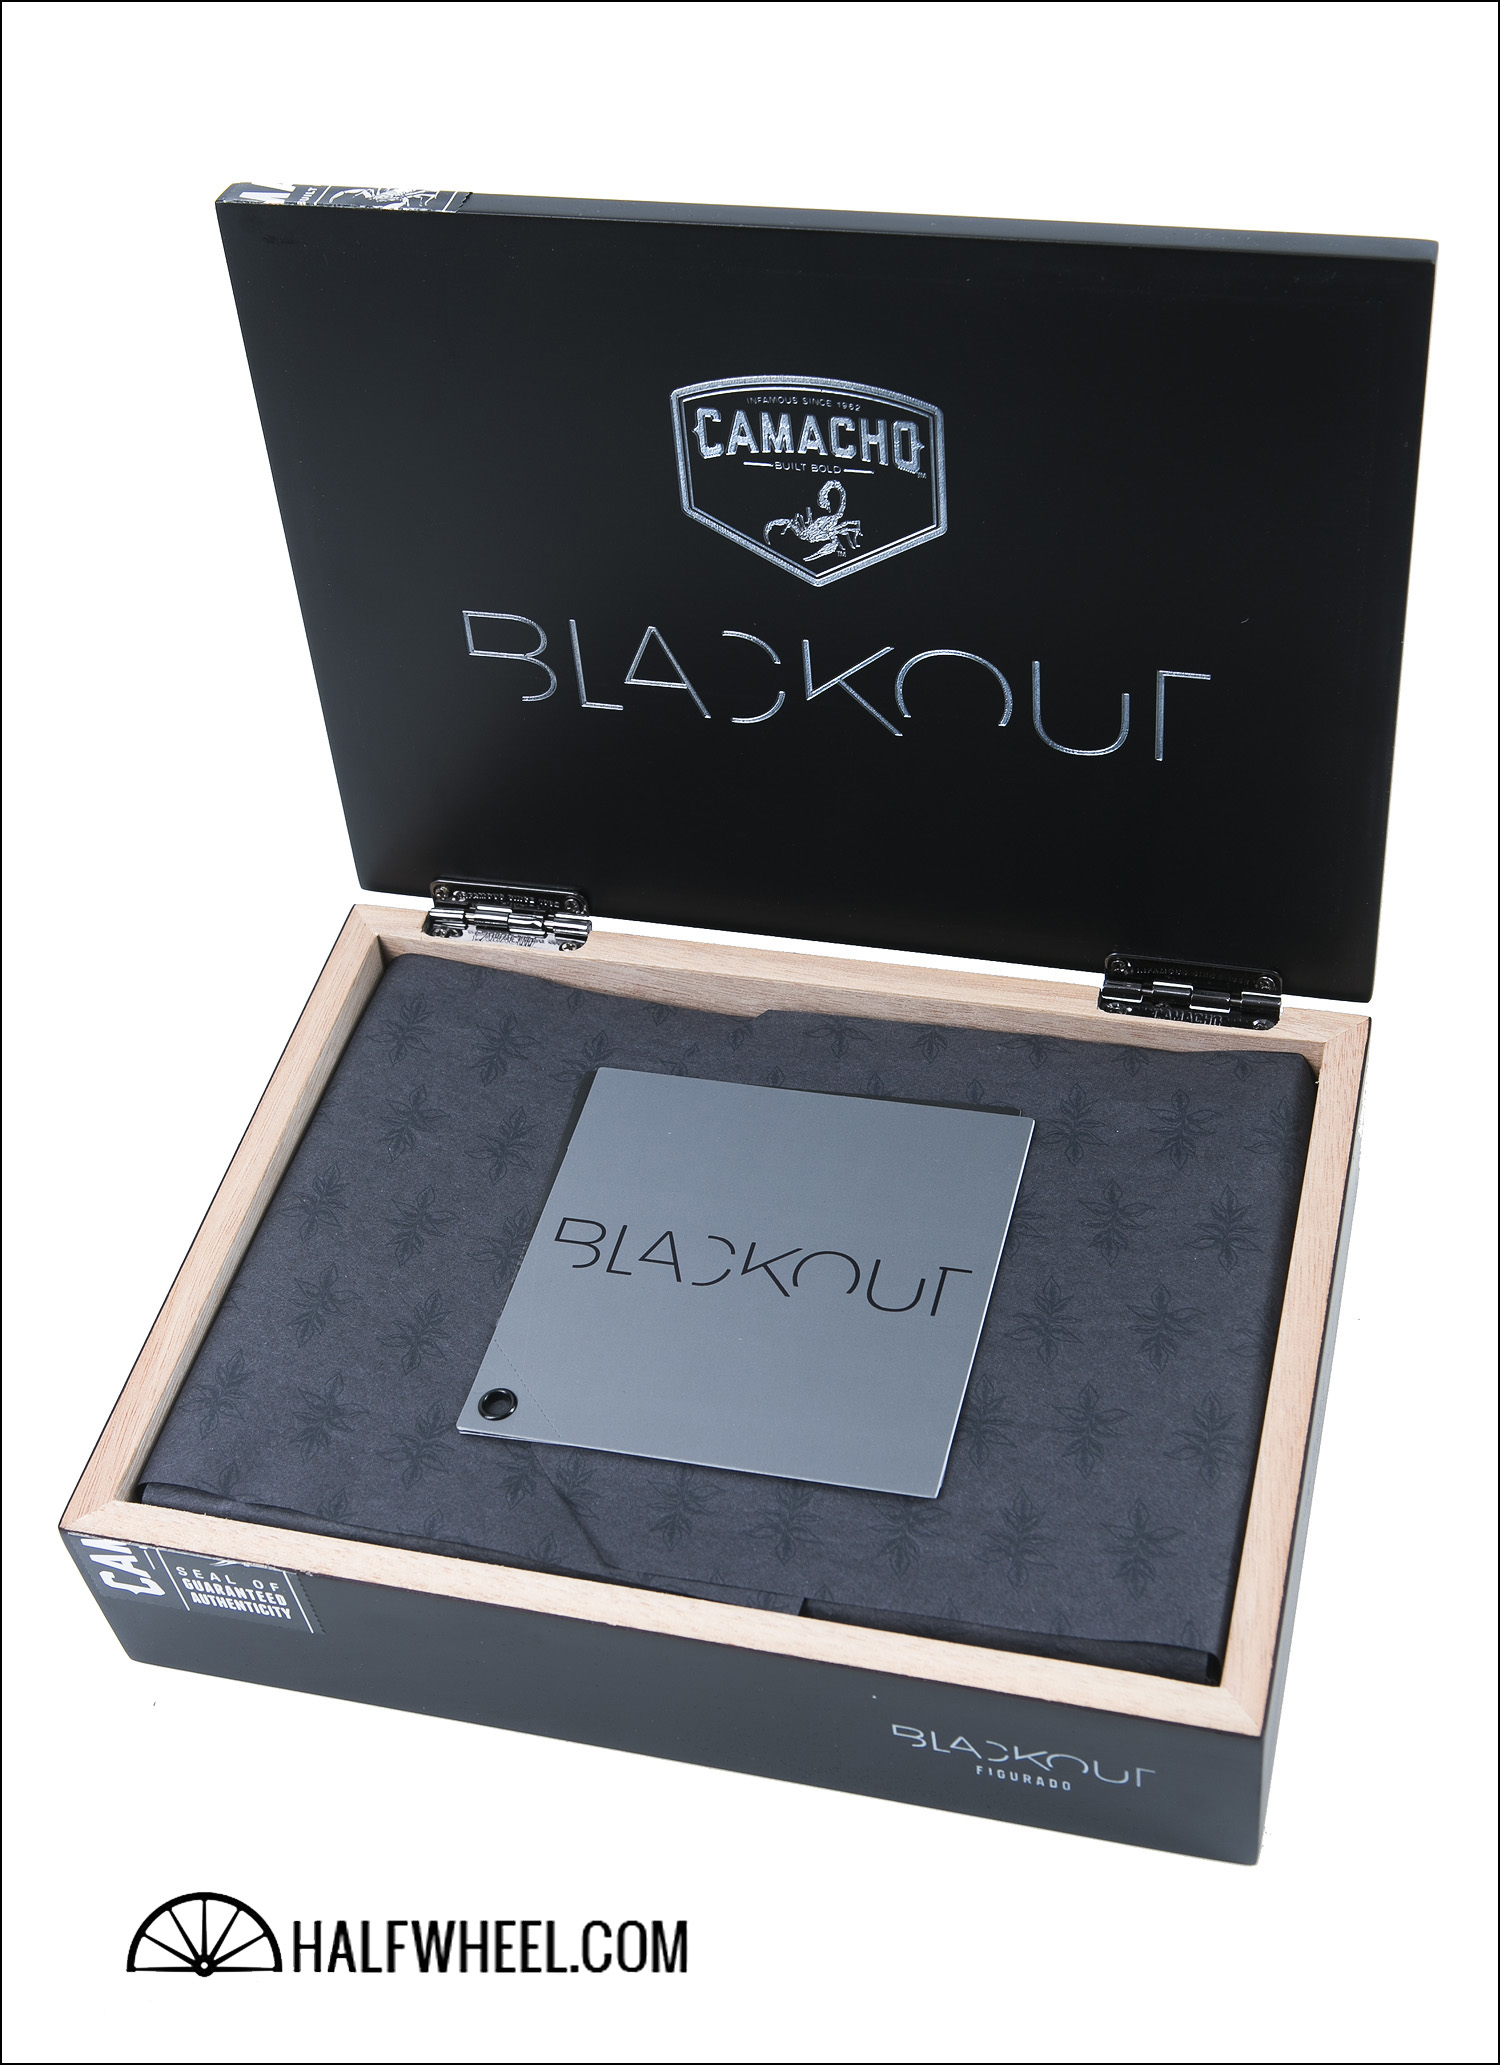 Camacho Blackout Limited Edition 2013 Box 2